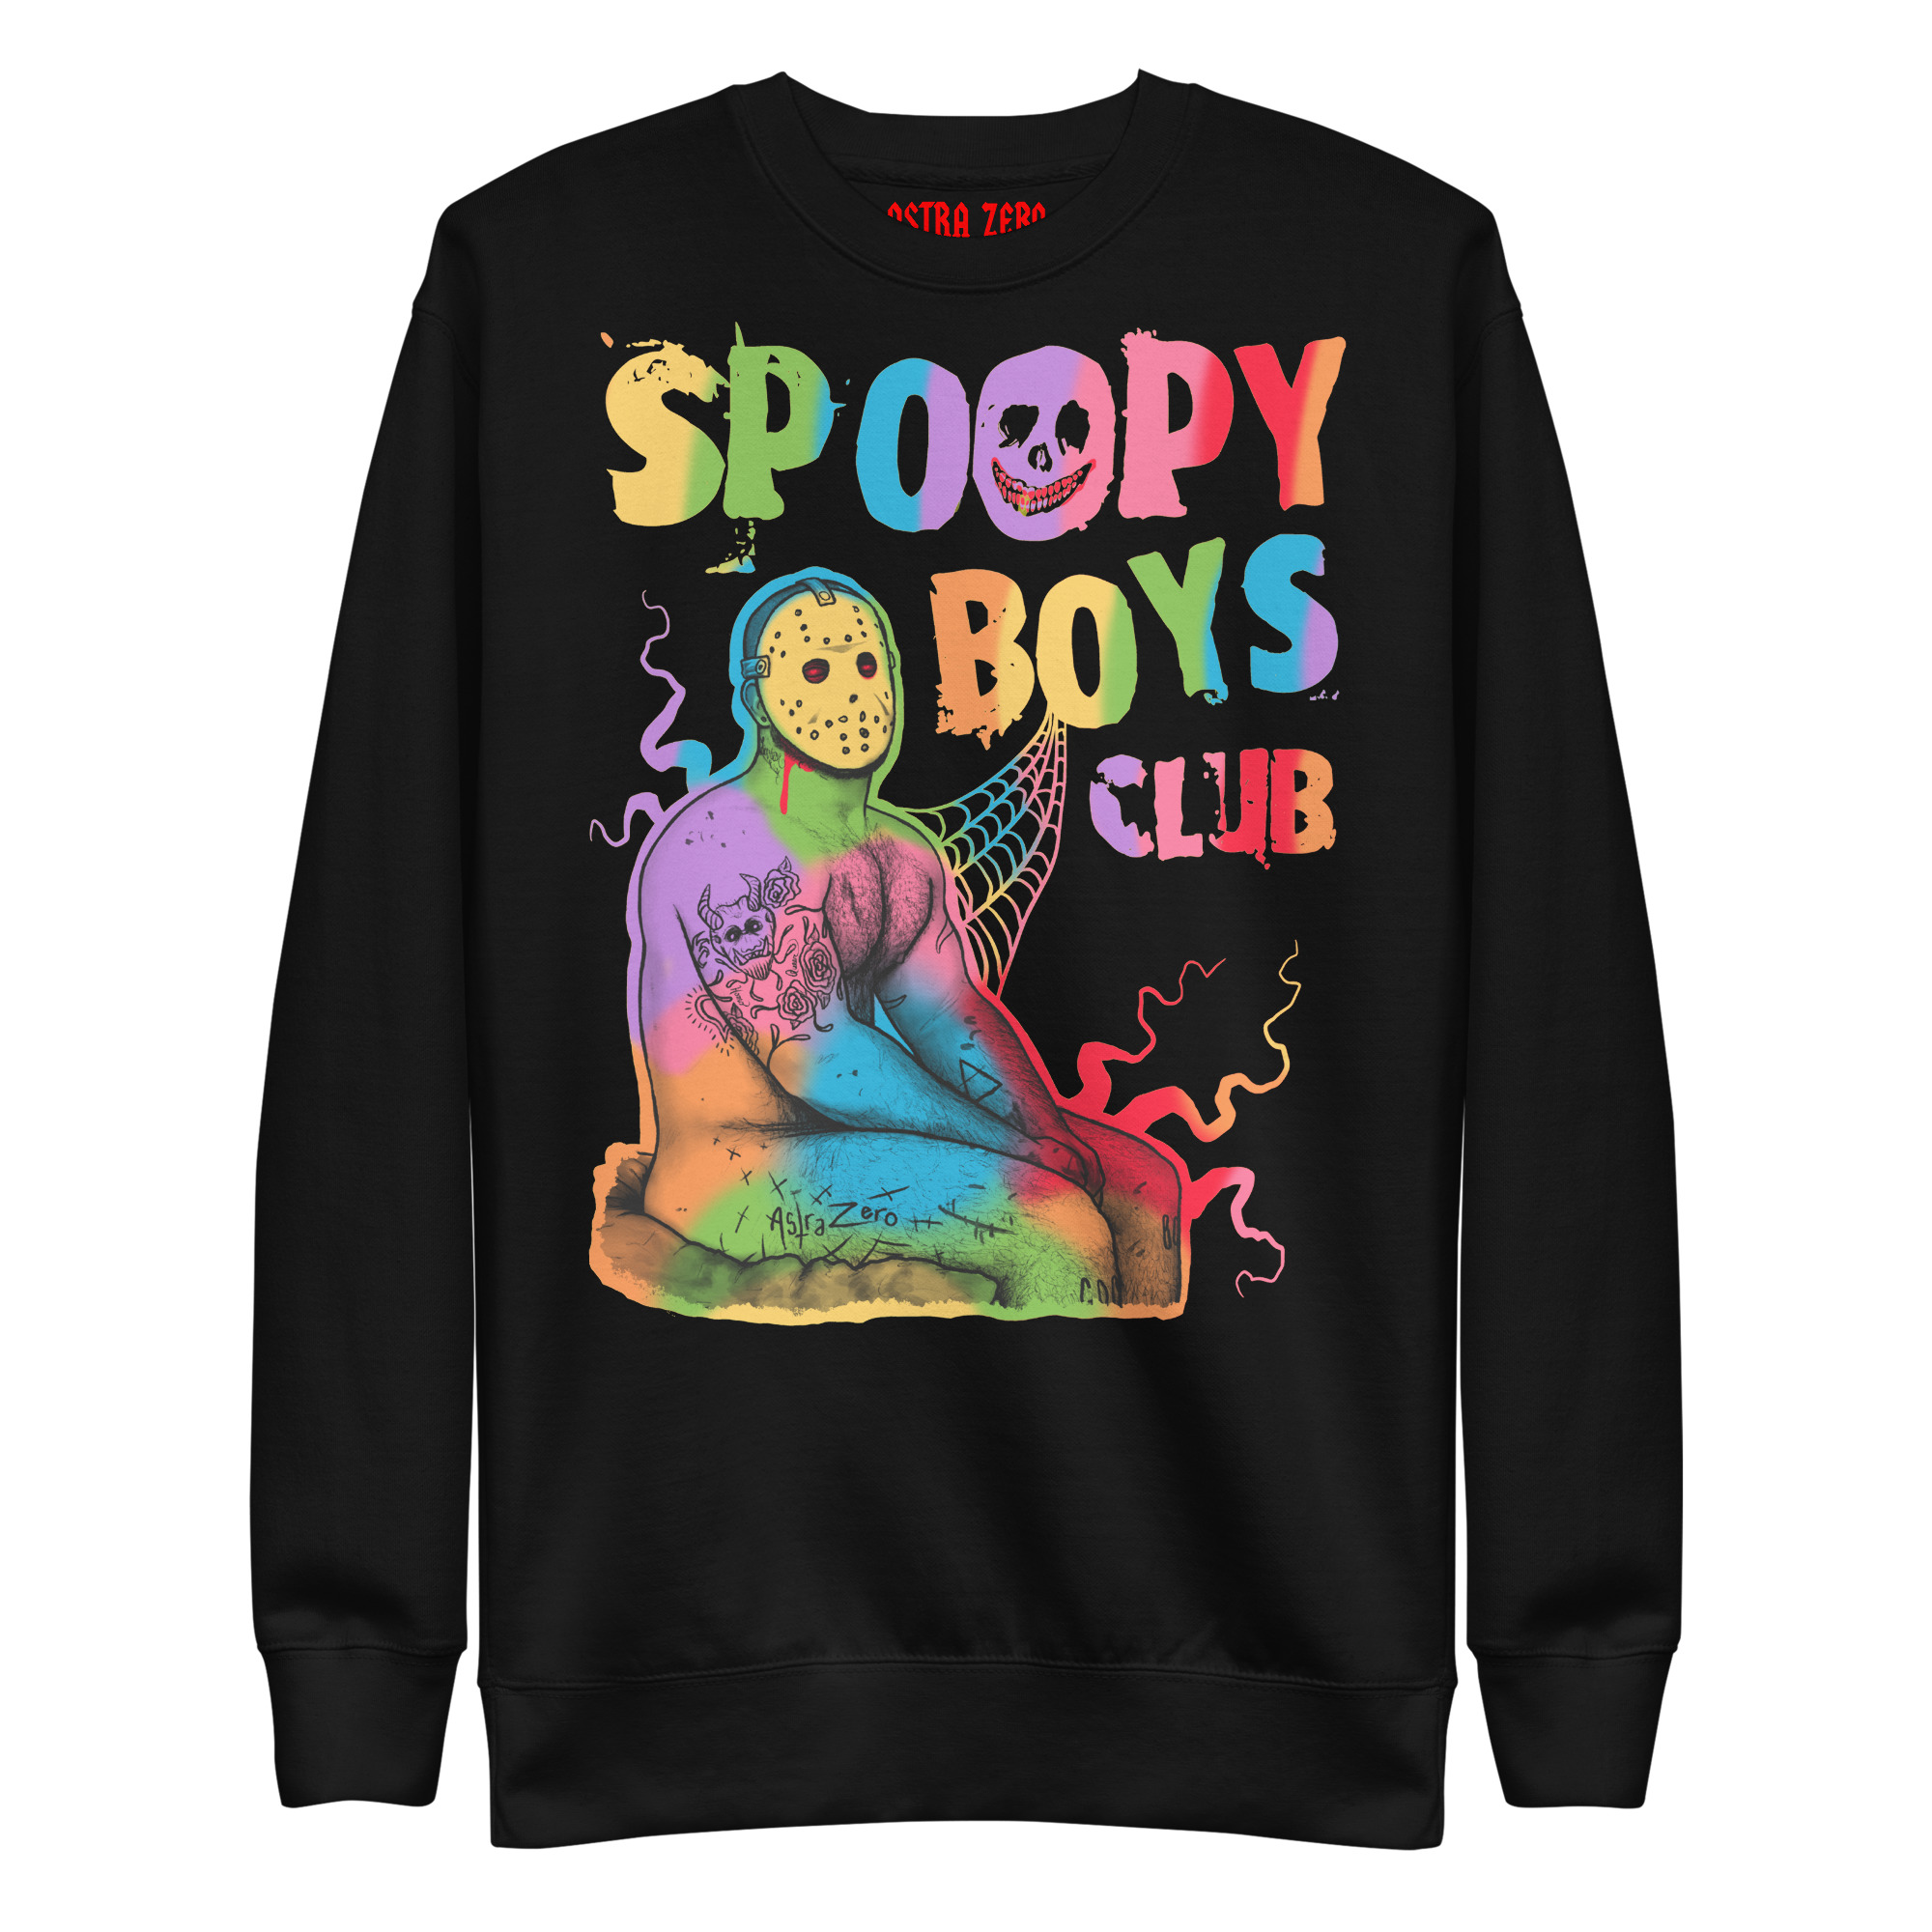 Featured image for “Spoopy Boys Club Pride Edition - Unisex Premium Sweatshirt”